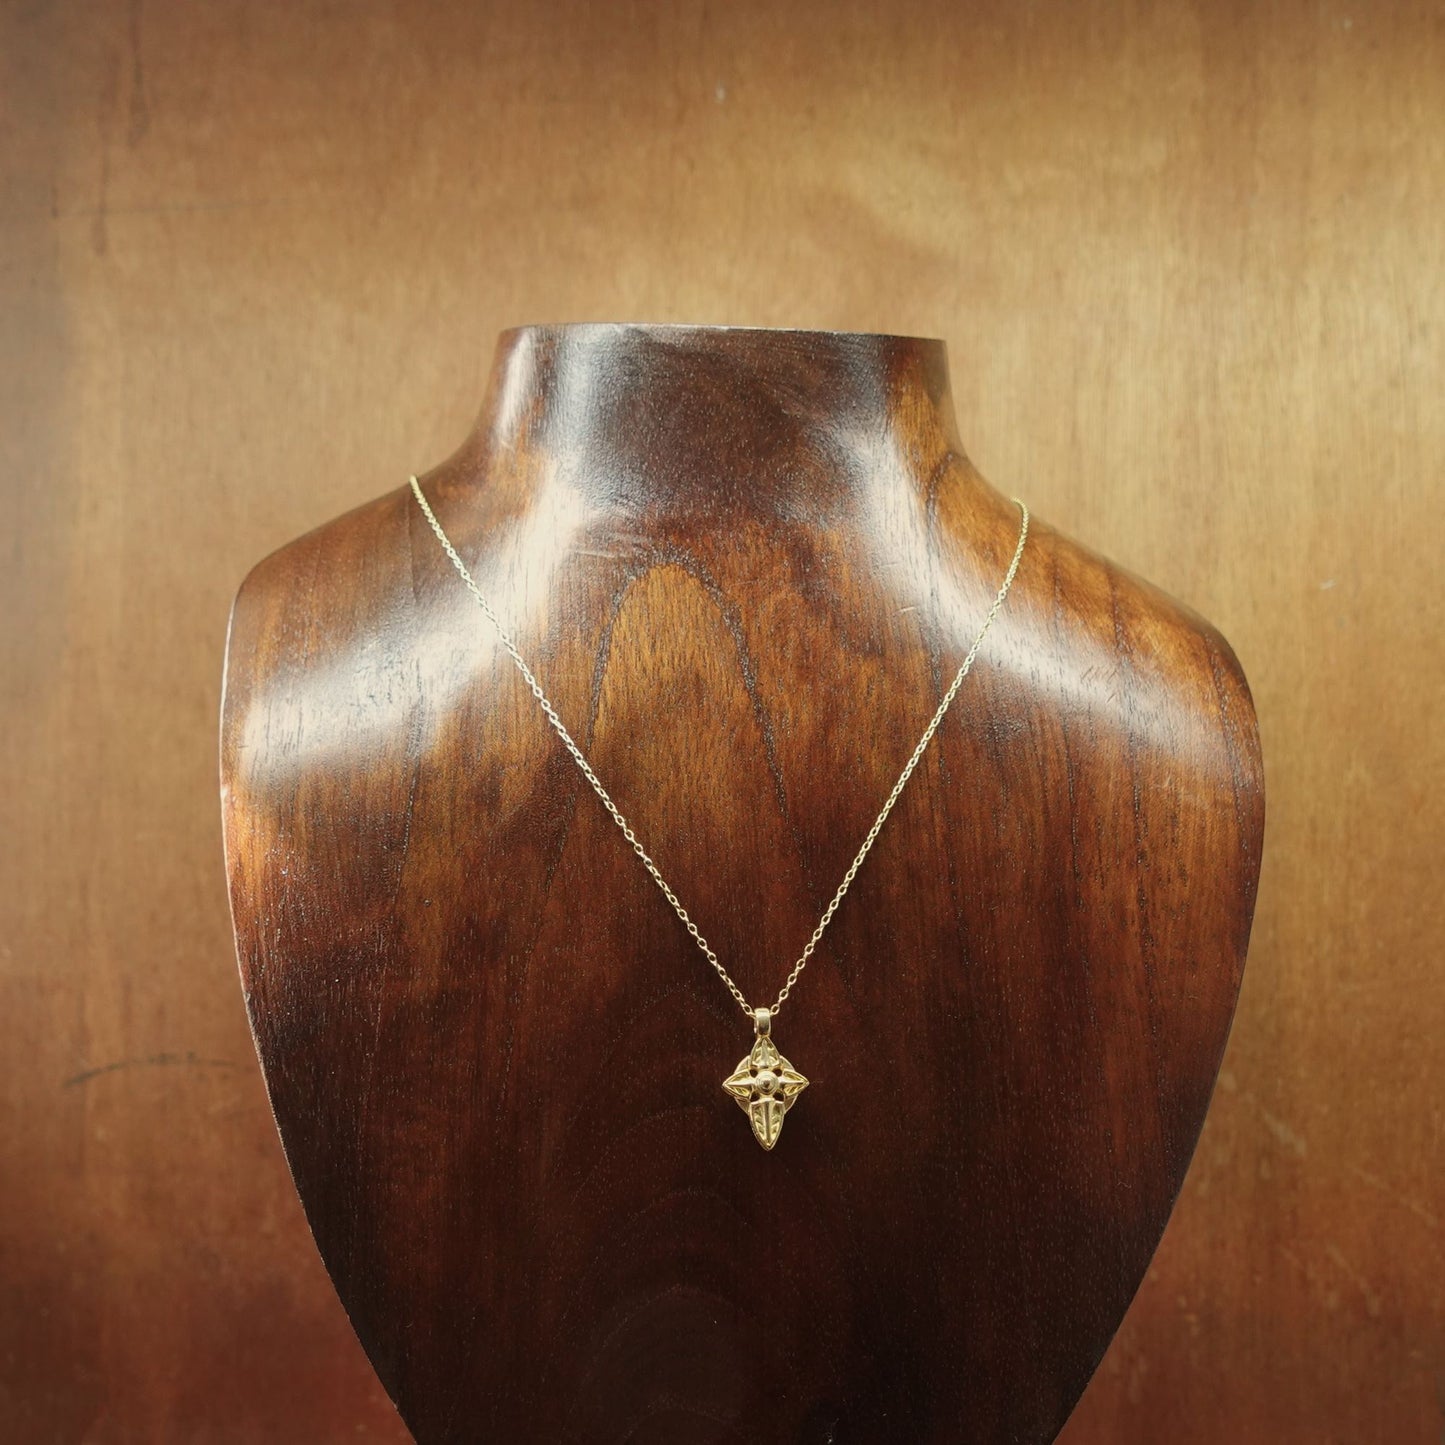 Gold vermeil Cross charm pendant and chain. © Adrian Ashley